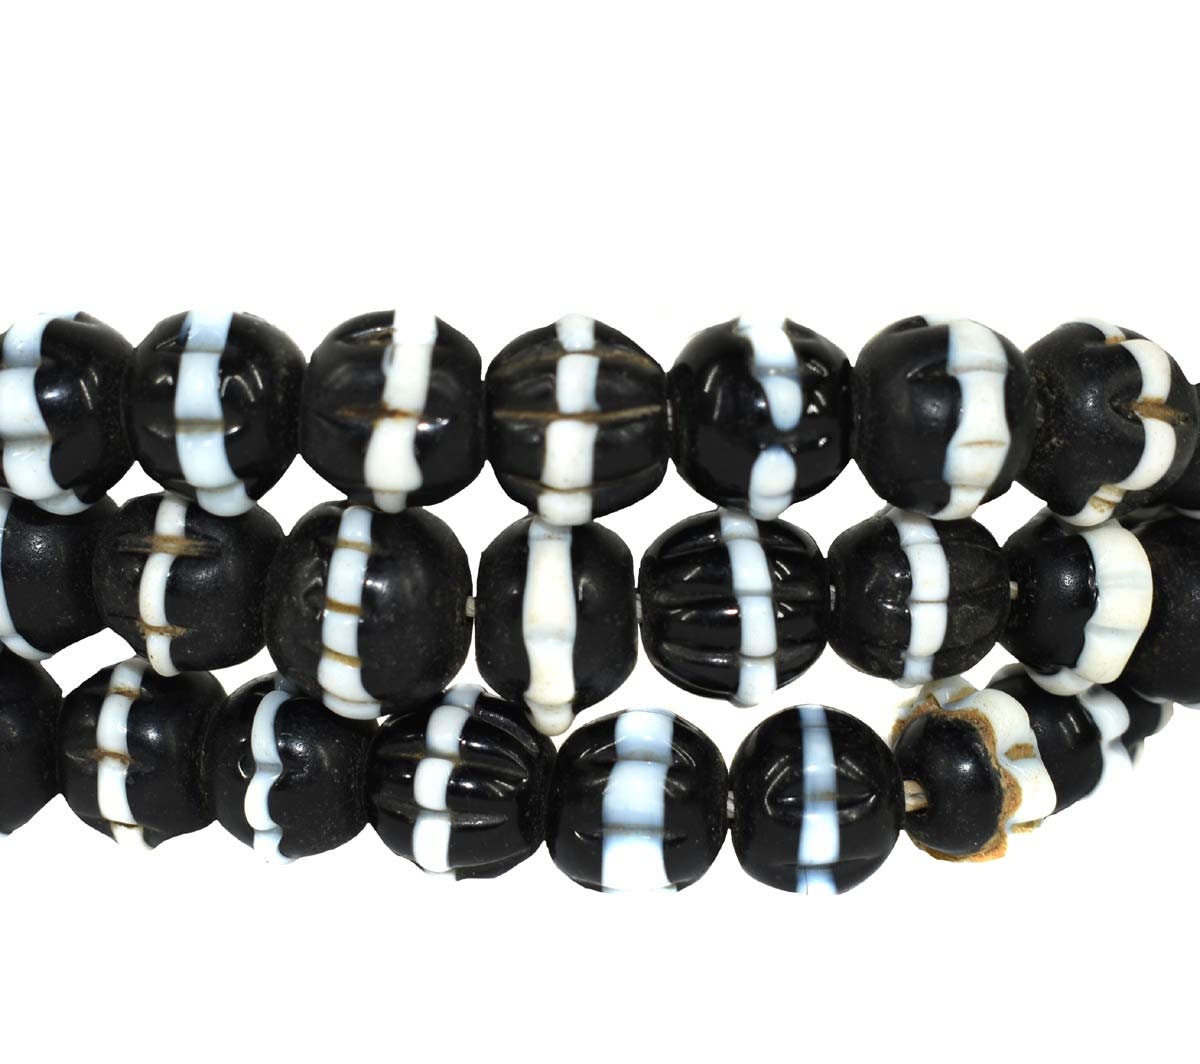 Old African Trade Beads (Dog teeth Beads)